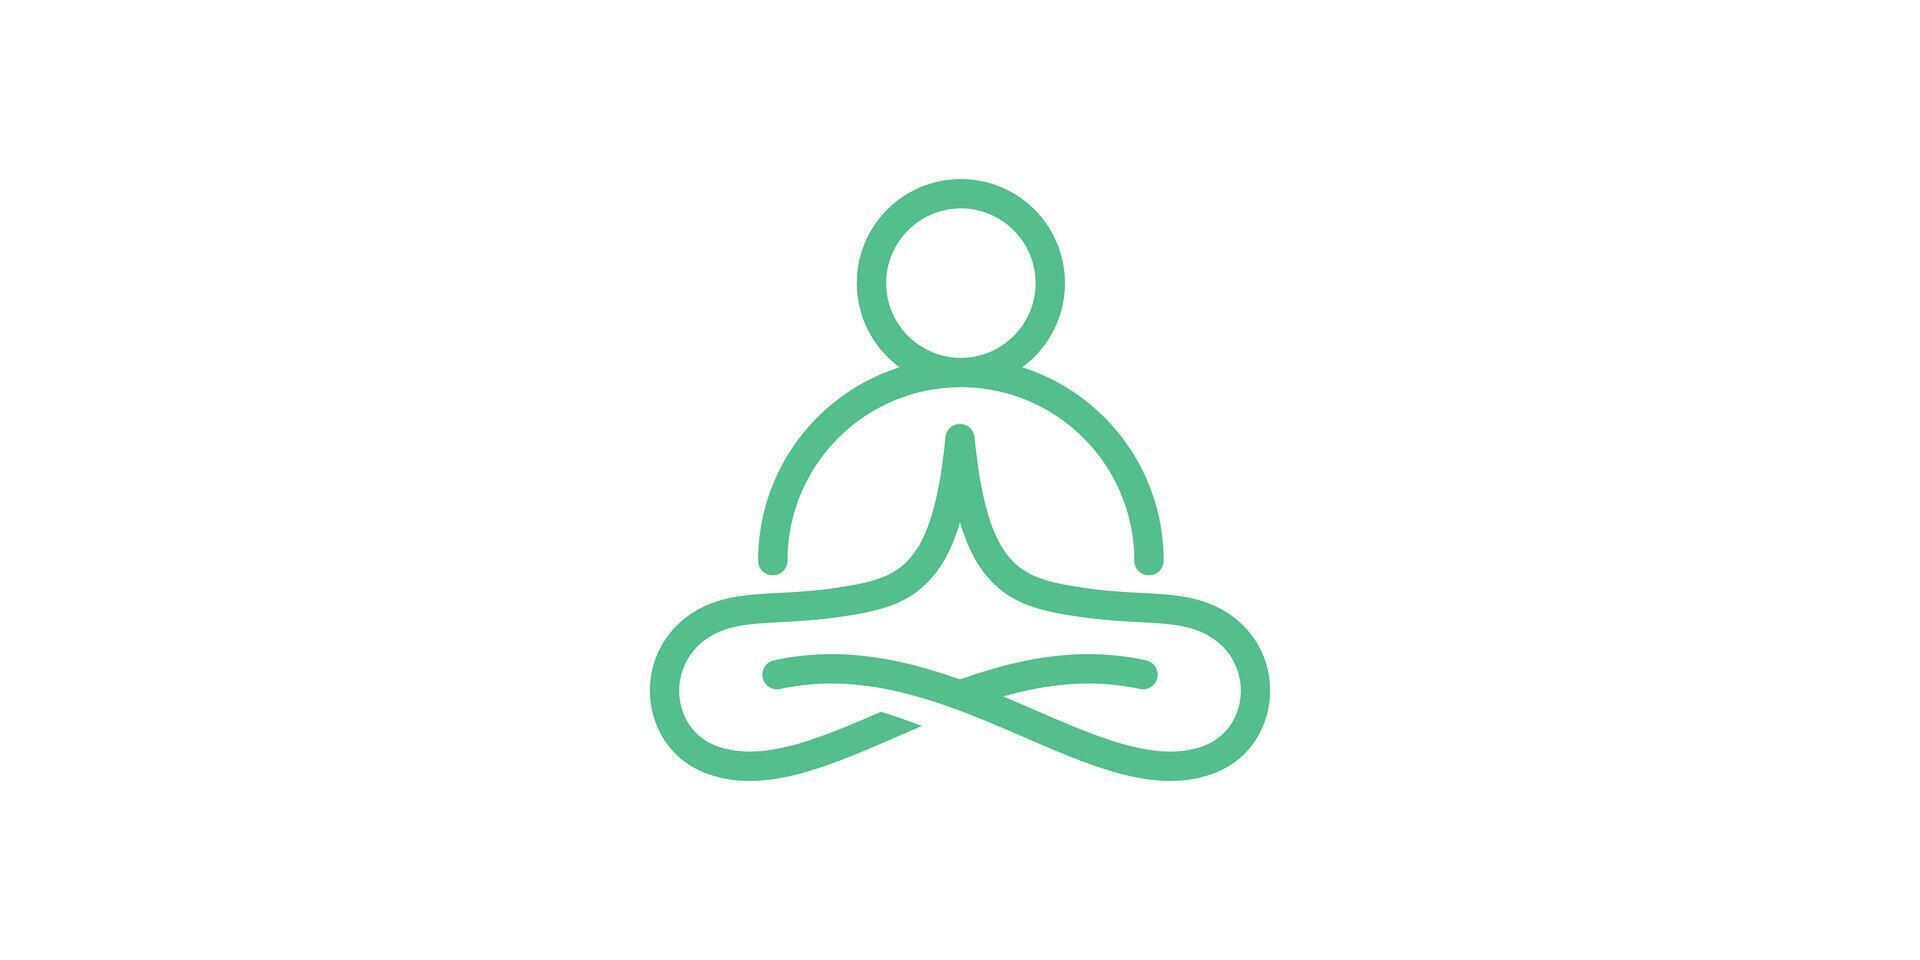 meditation therapy logo design. Yoga person logo, logo design template, symbol, icon, creative. vector